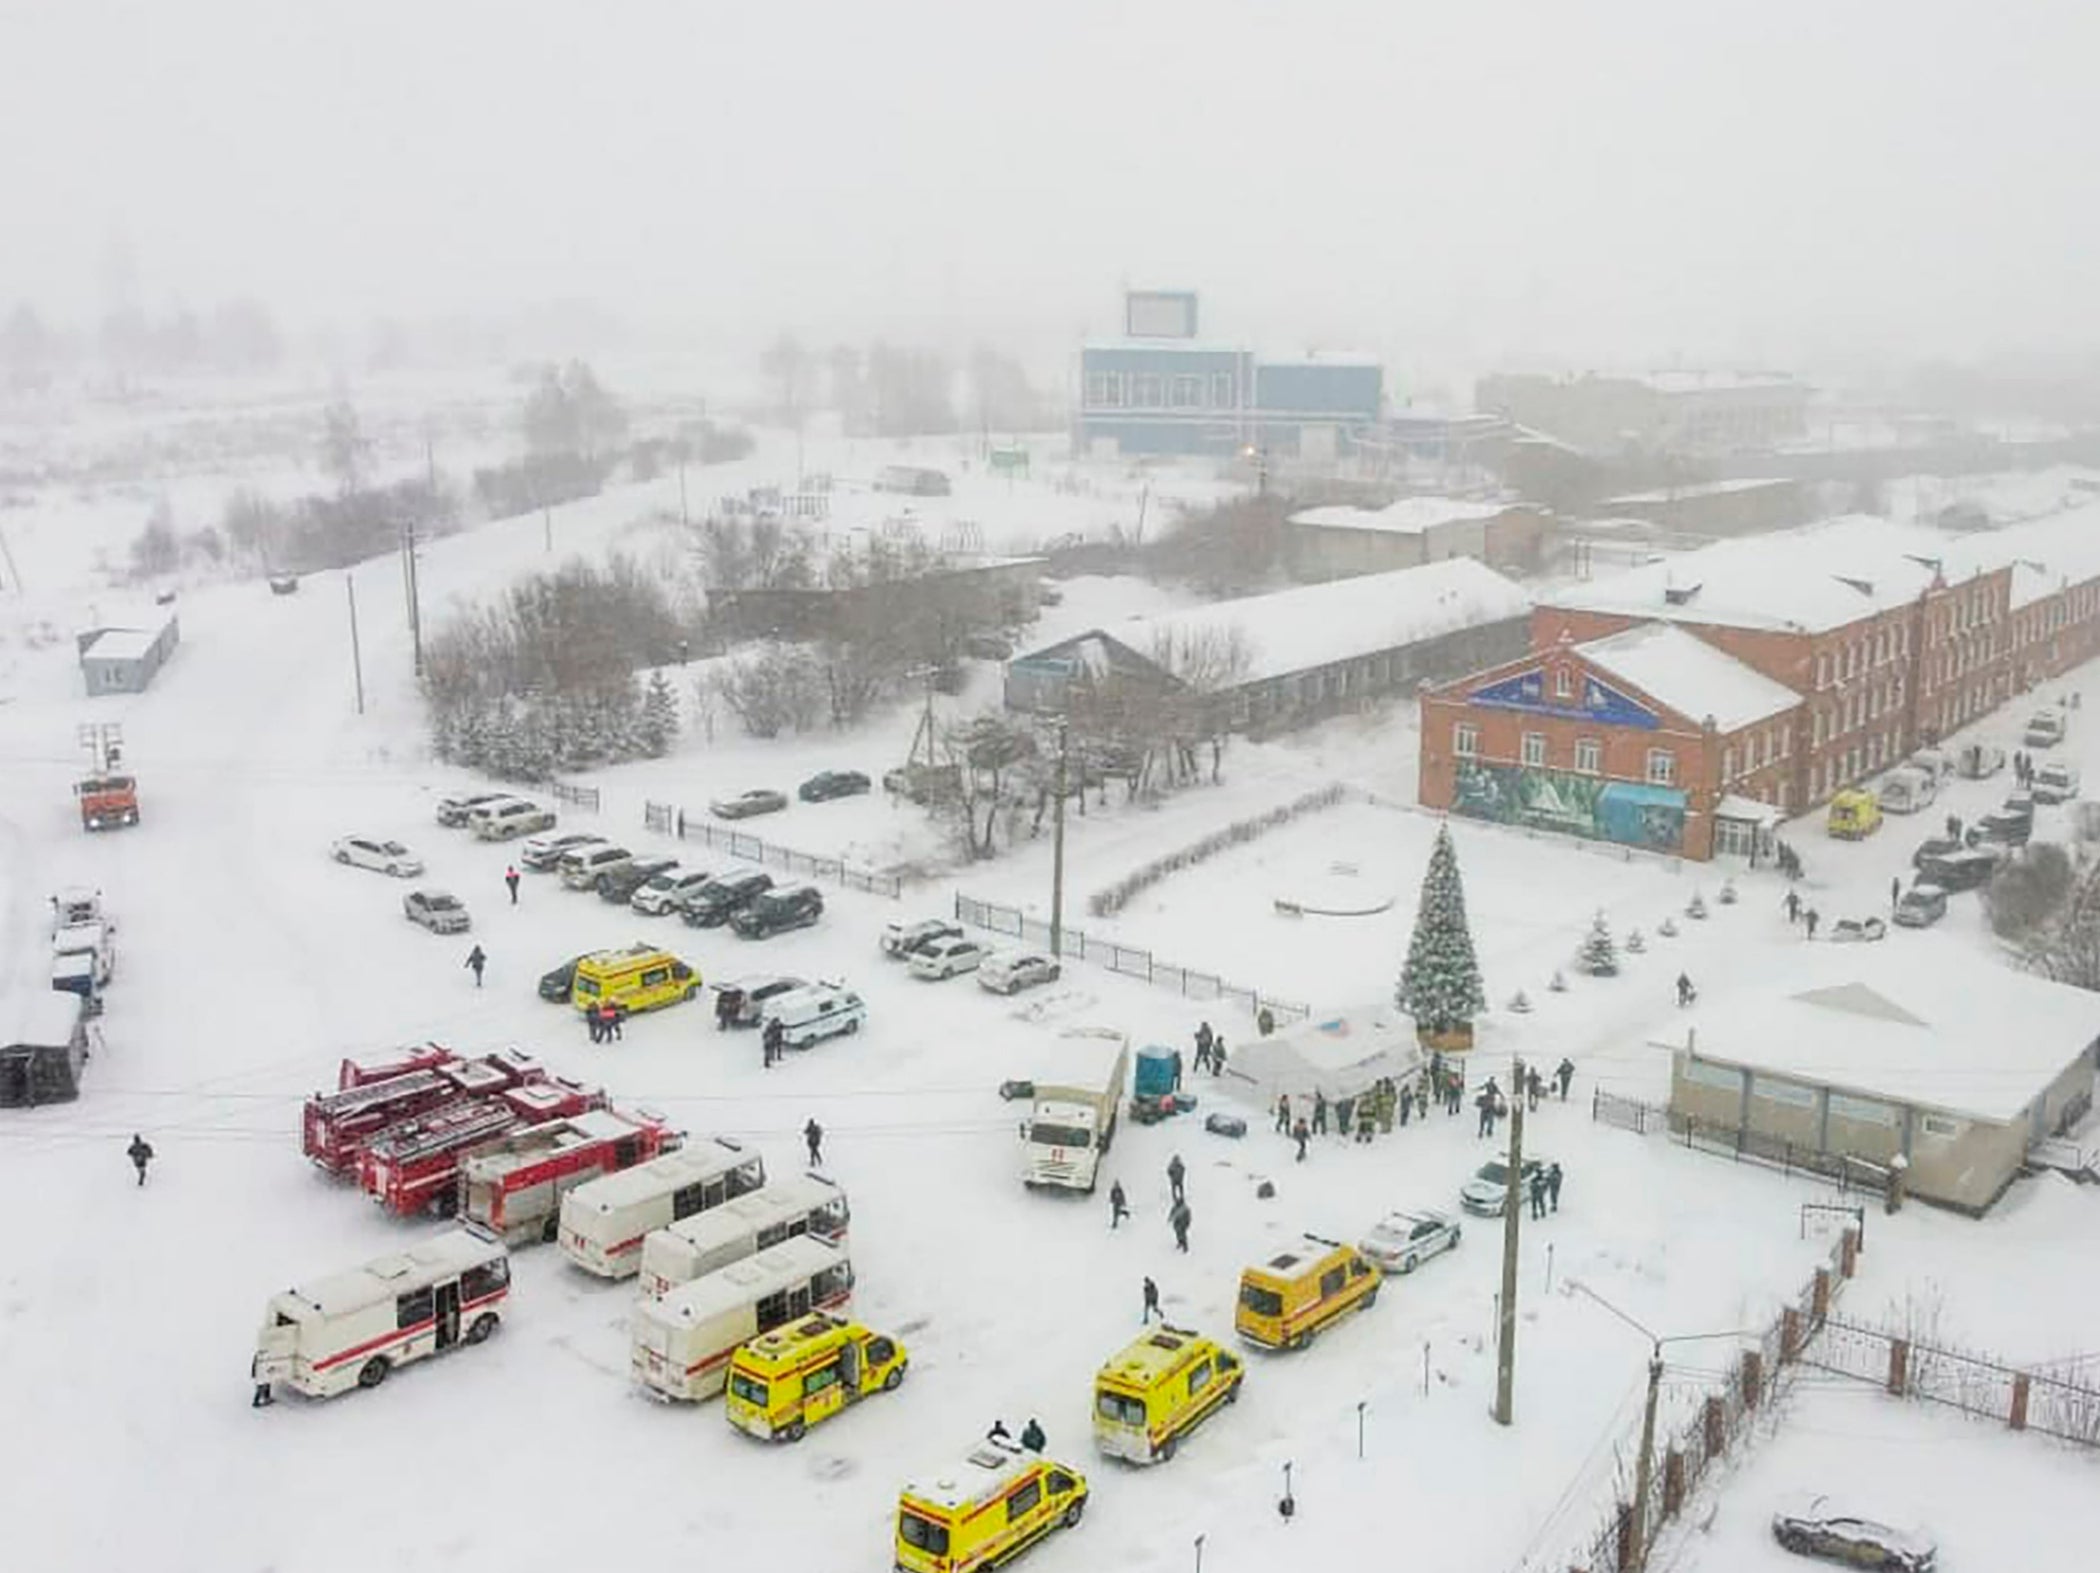 Ambulances and fire trucks are parked near the Listvyazhnaya coal mine